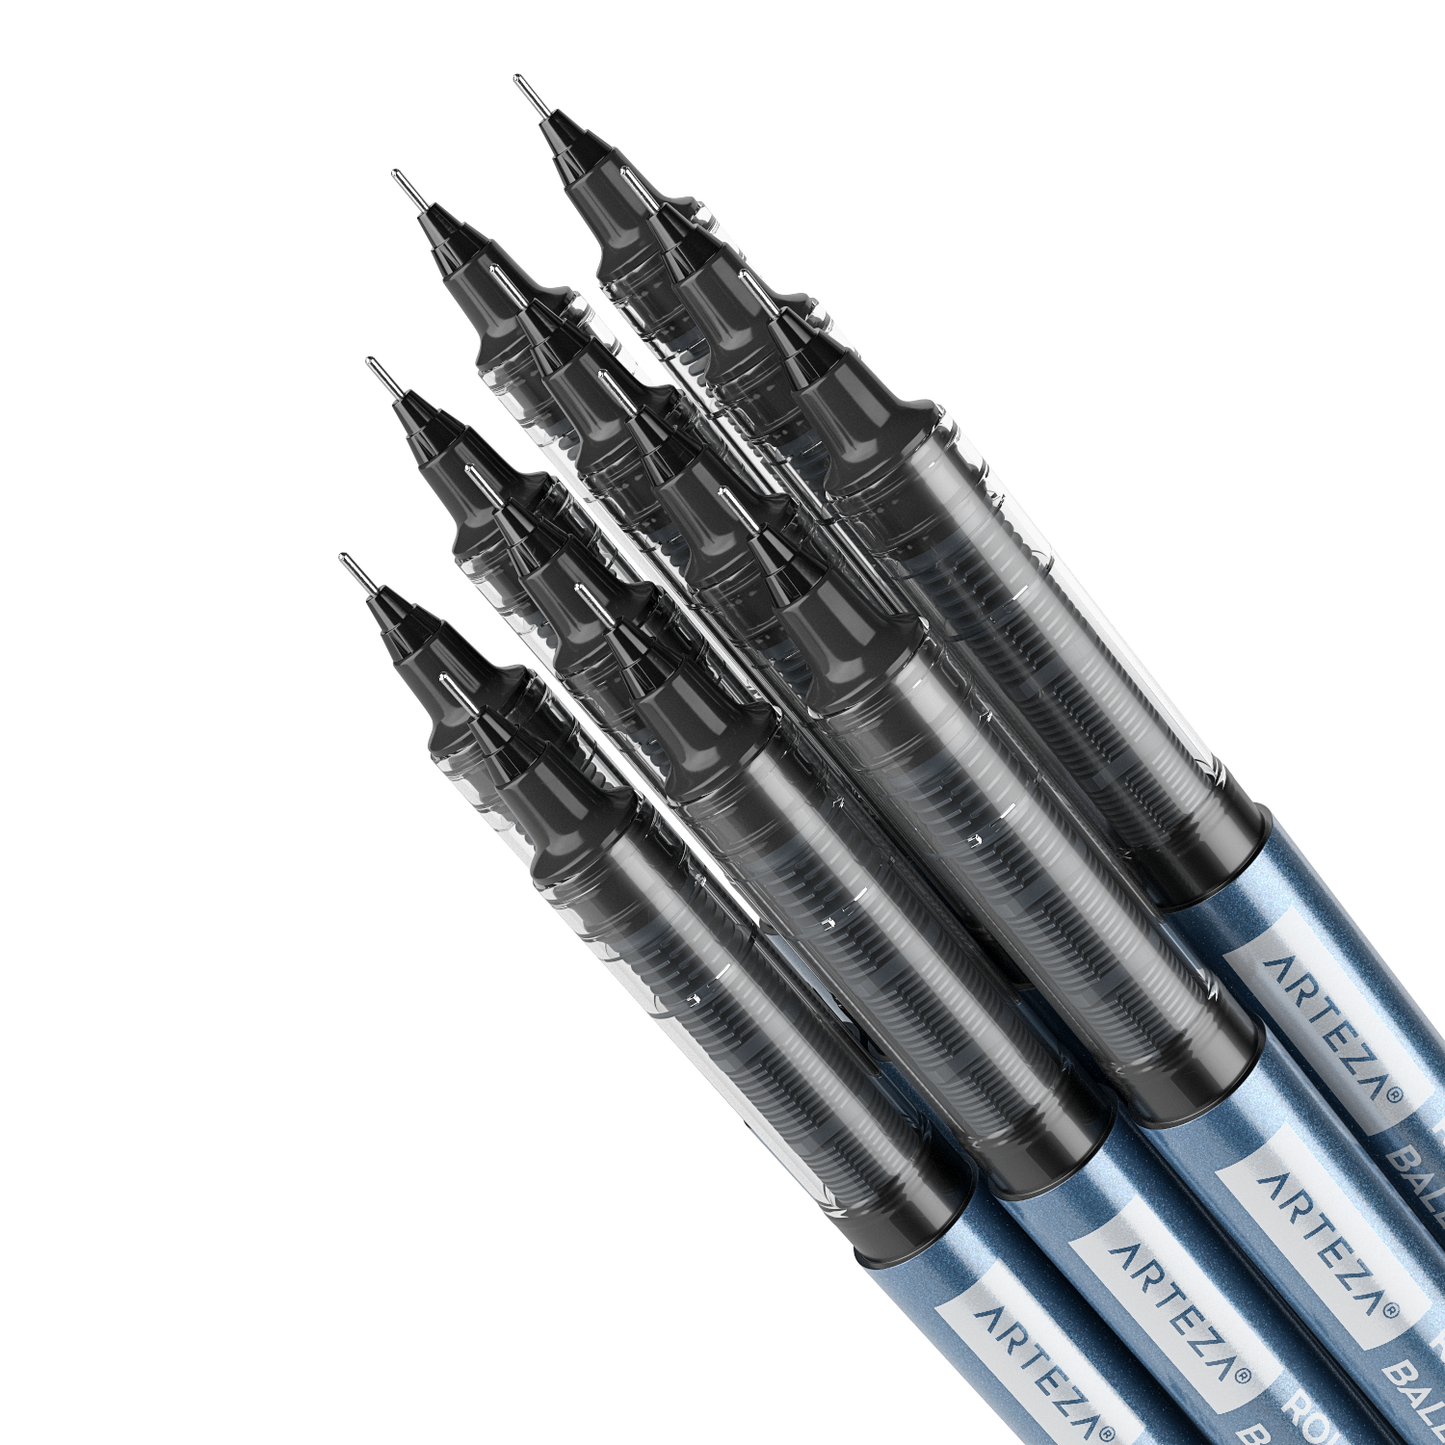 Roller Ball Pens, Black, 0.5mm Needle Nib - Set of 20